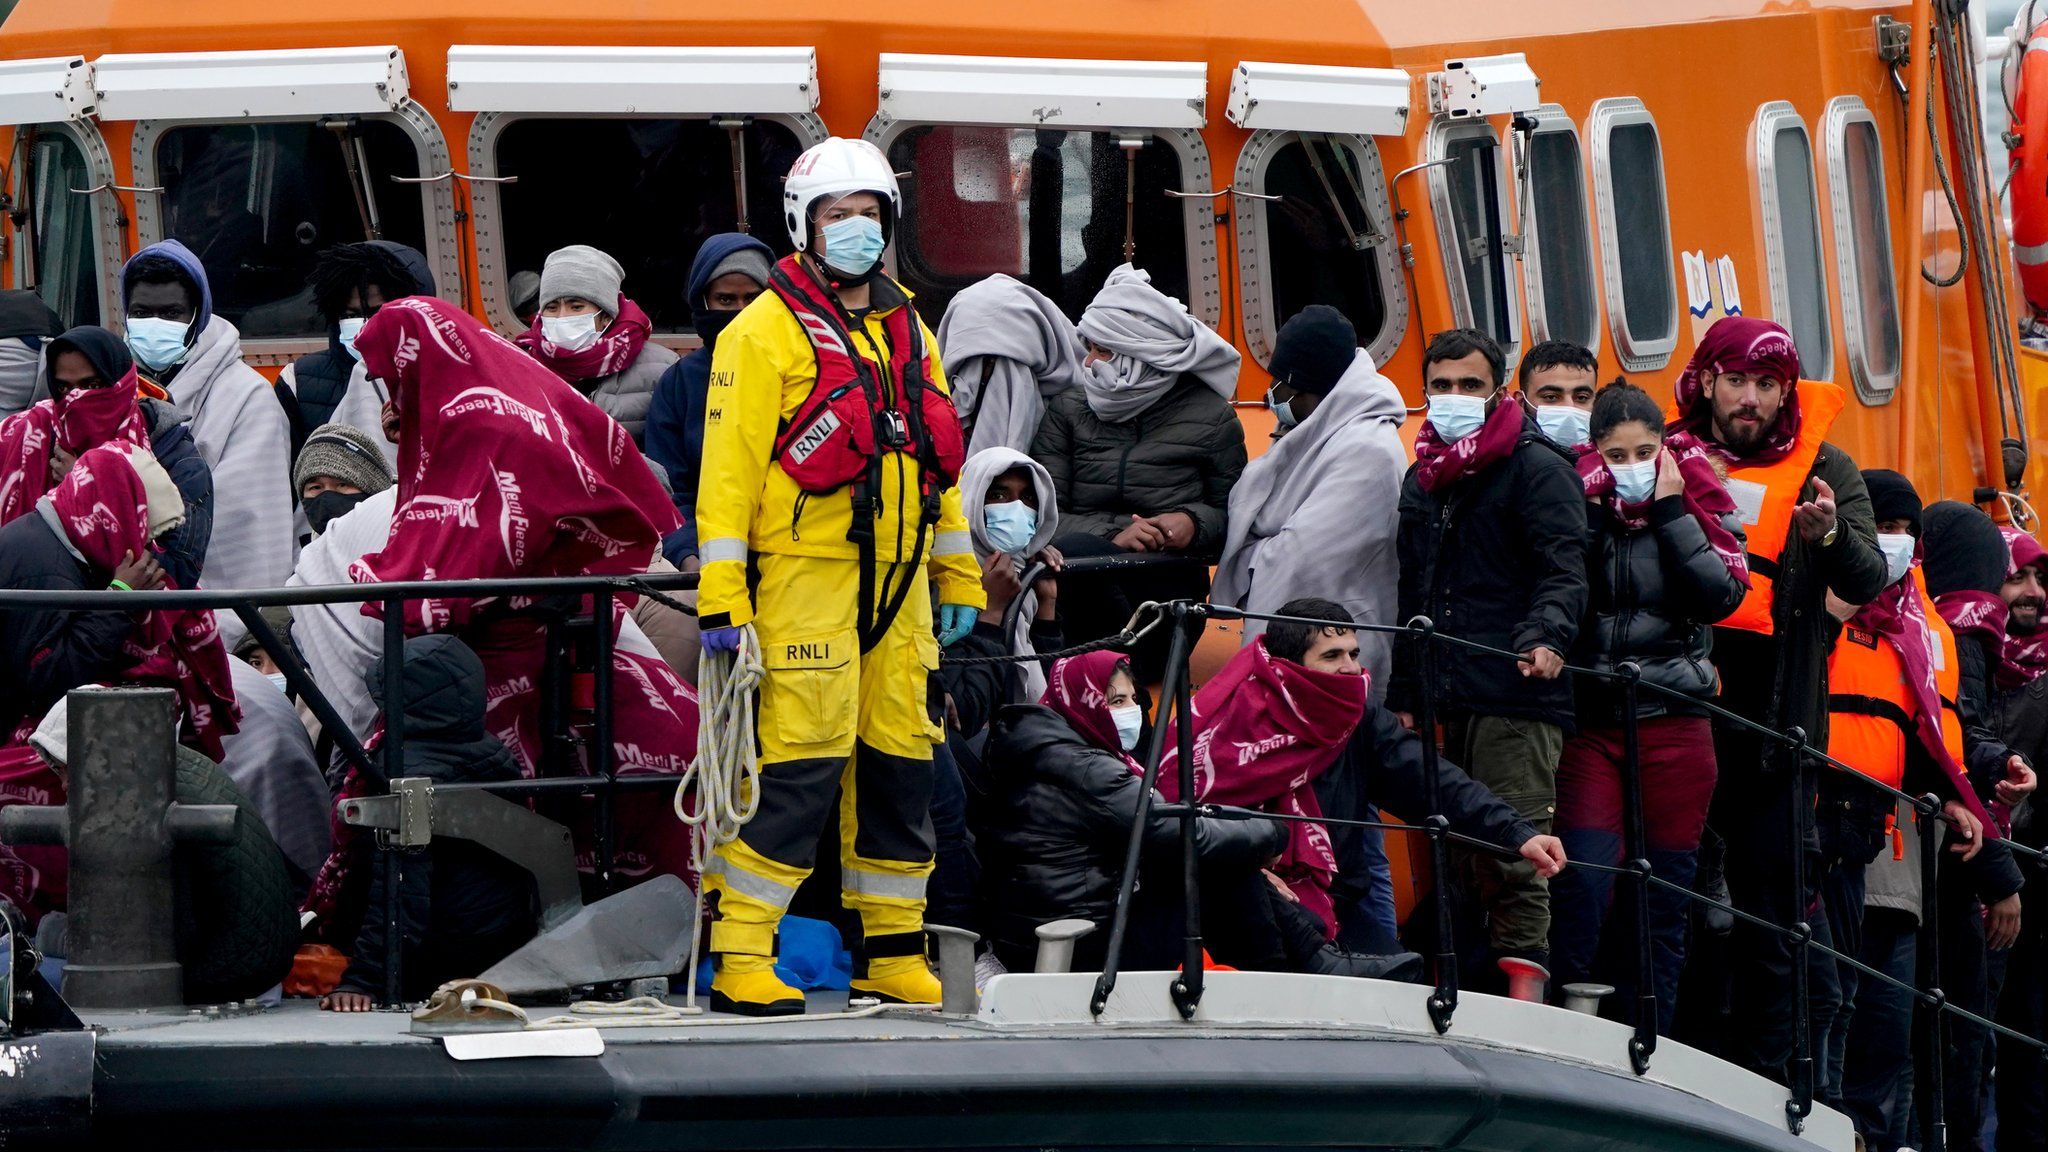 Dover lifeboat brings migrants ashore